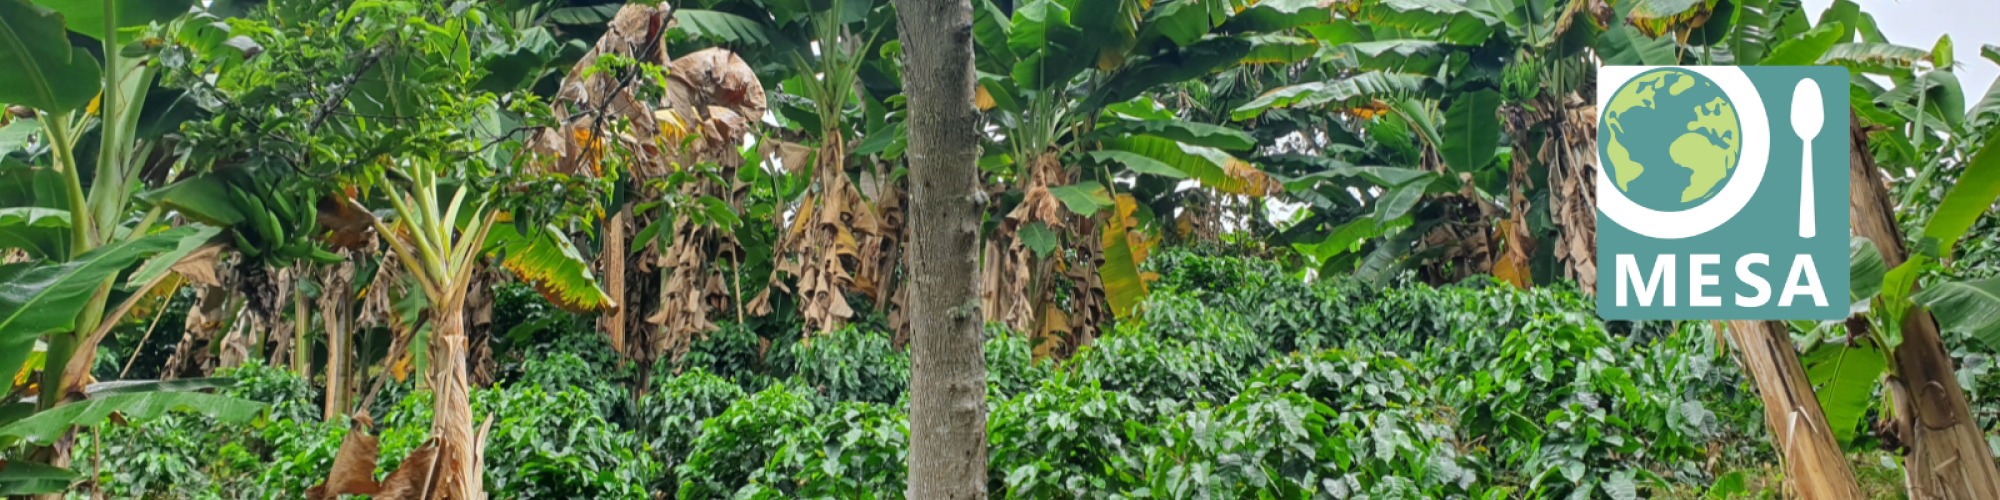 MESA logo on a photo background of a shade coffee plantation. Photo by Camilo Ardila Galvis.